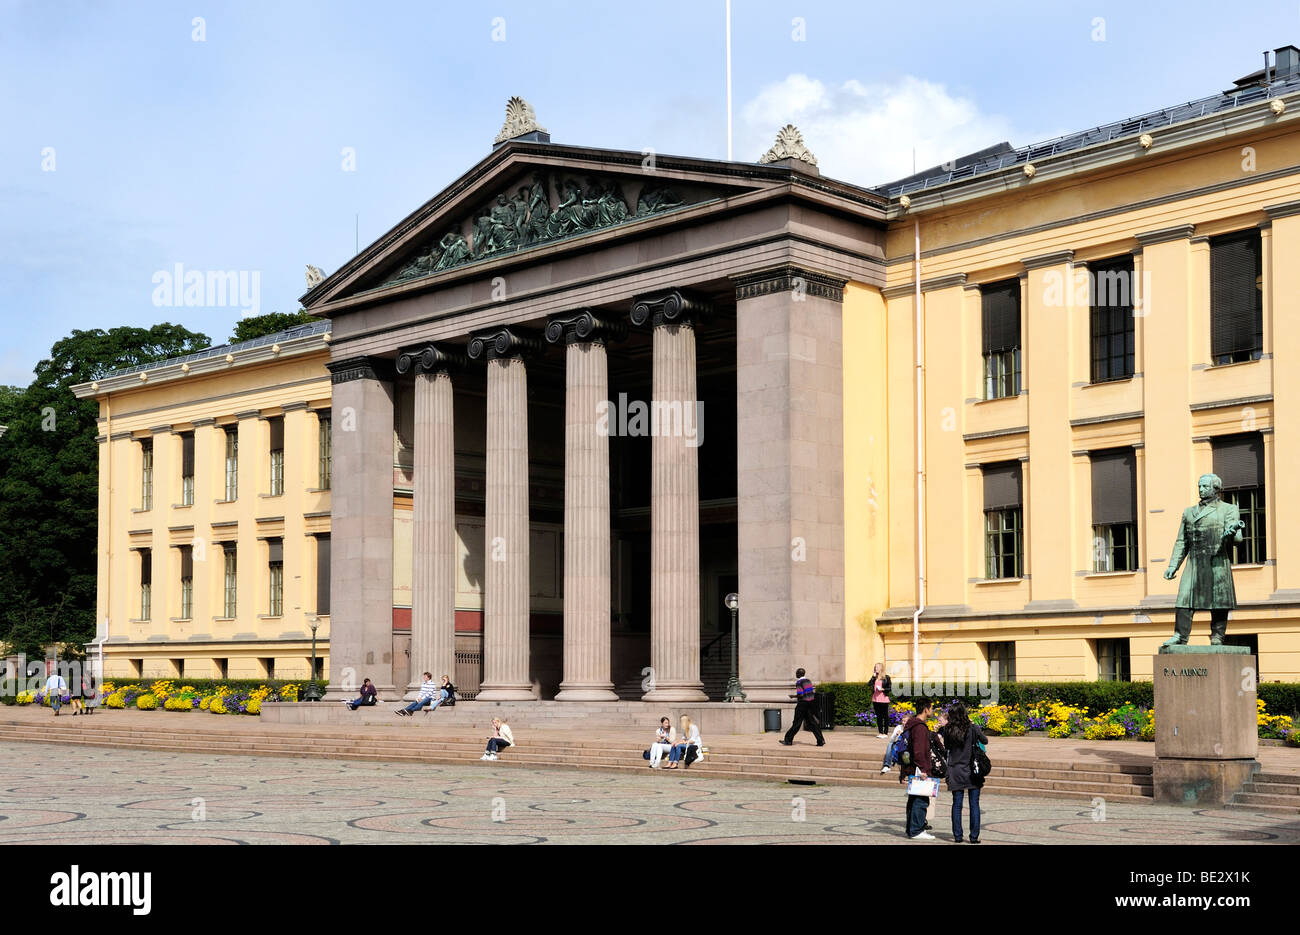 University of Oslo, Norway, Scandinavia, Northern Europe Stock Photo